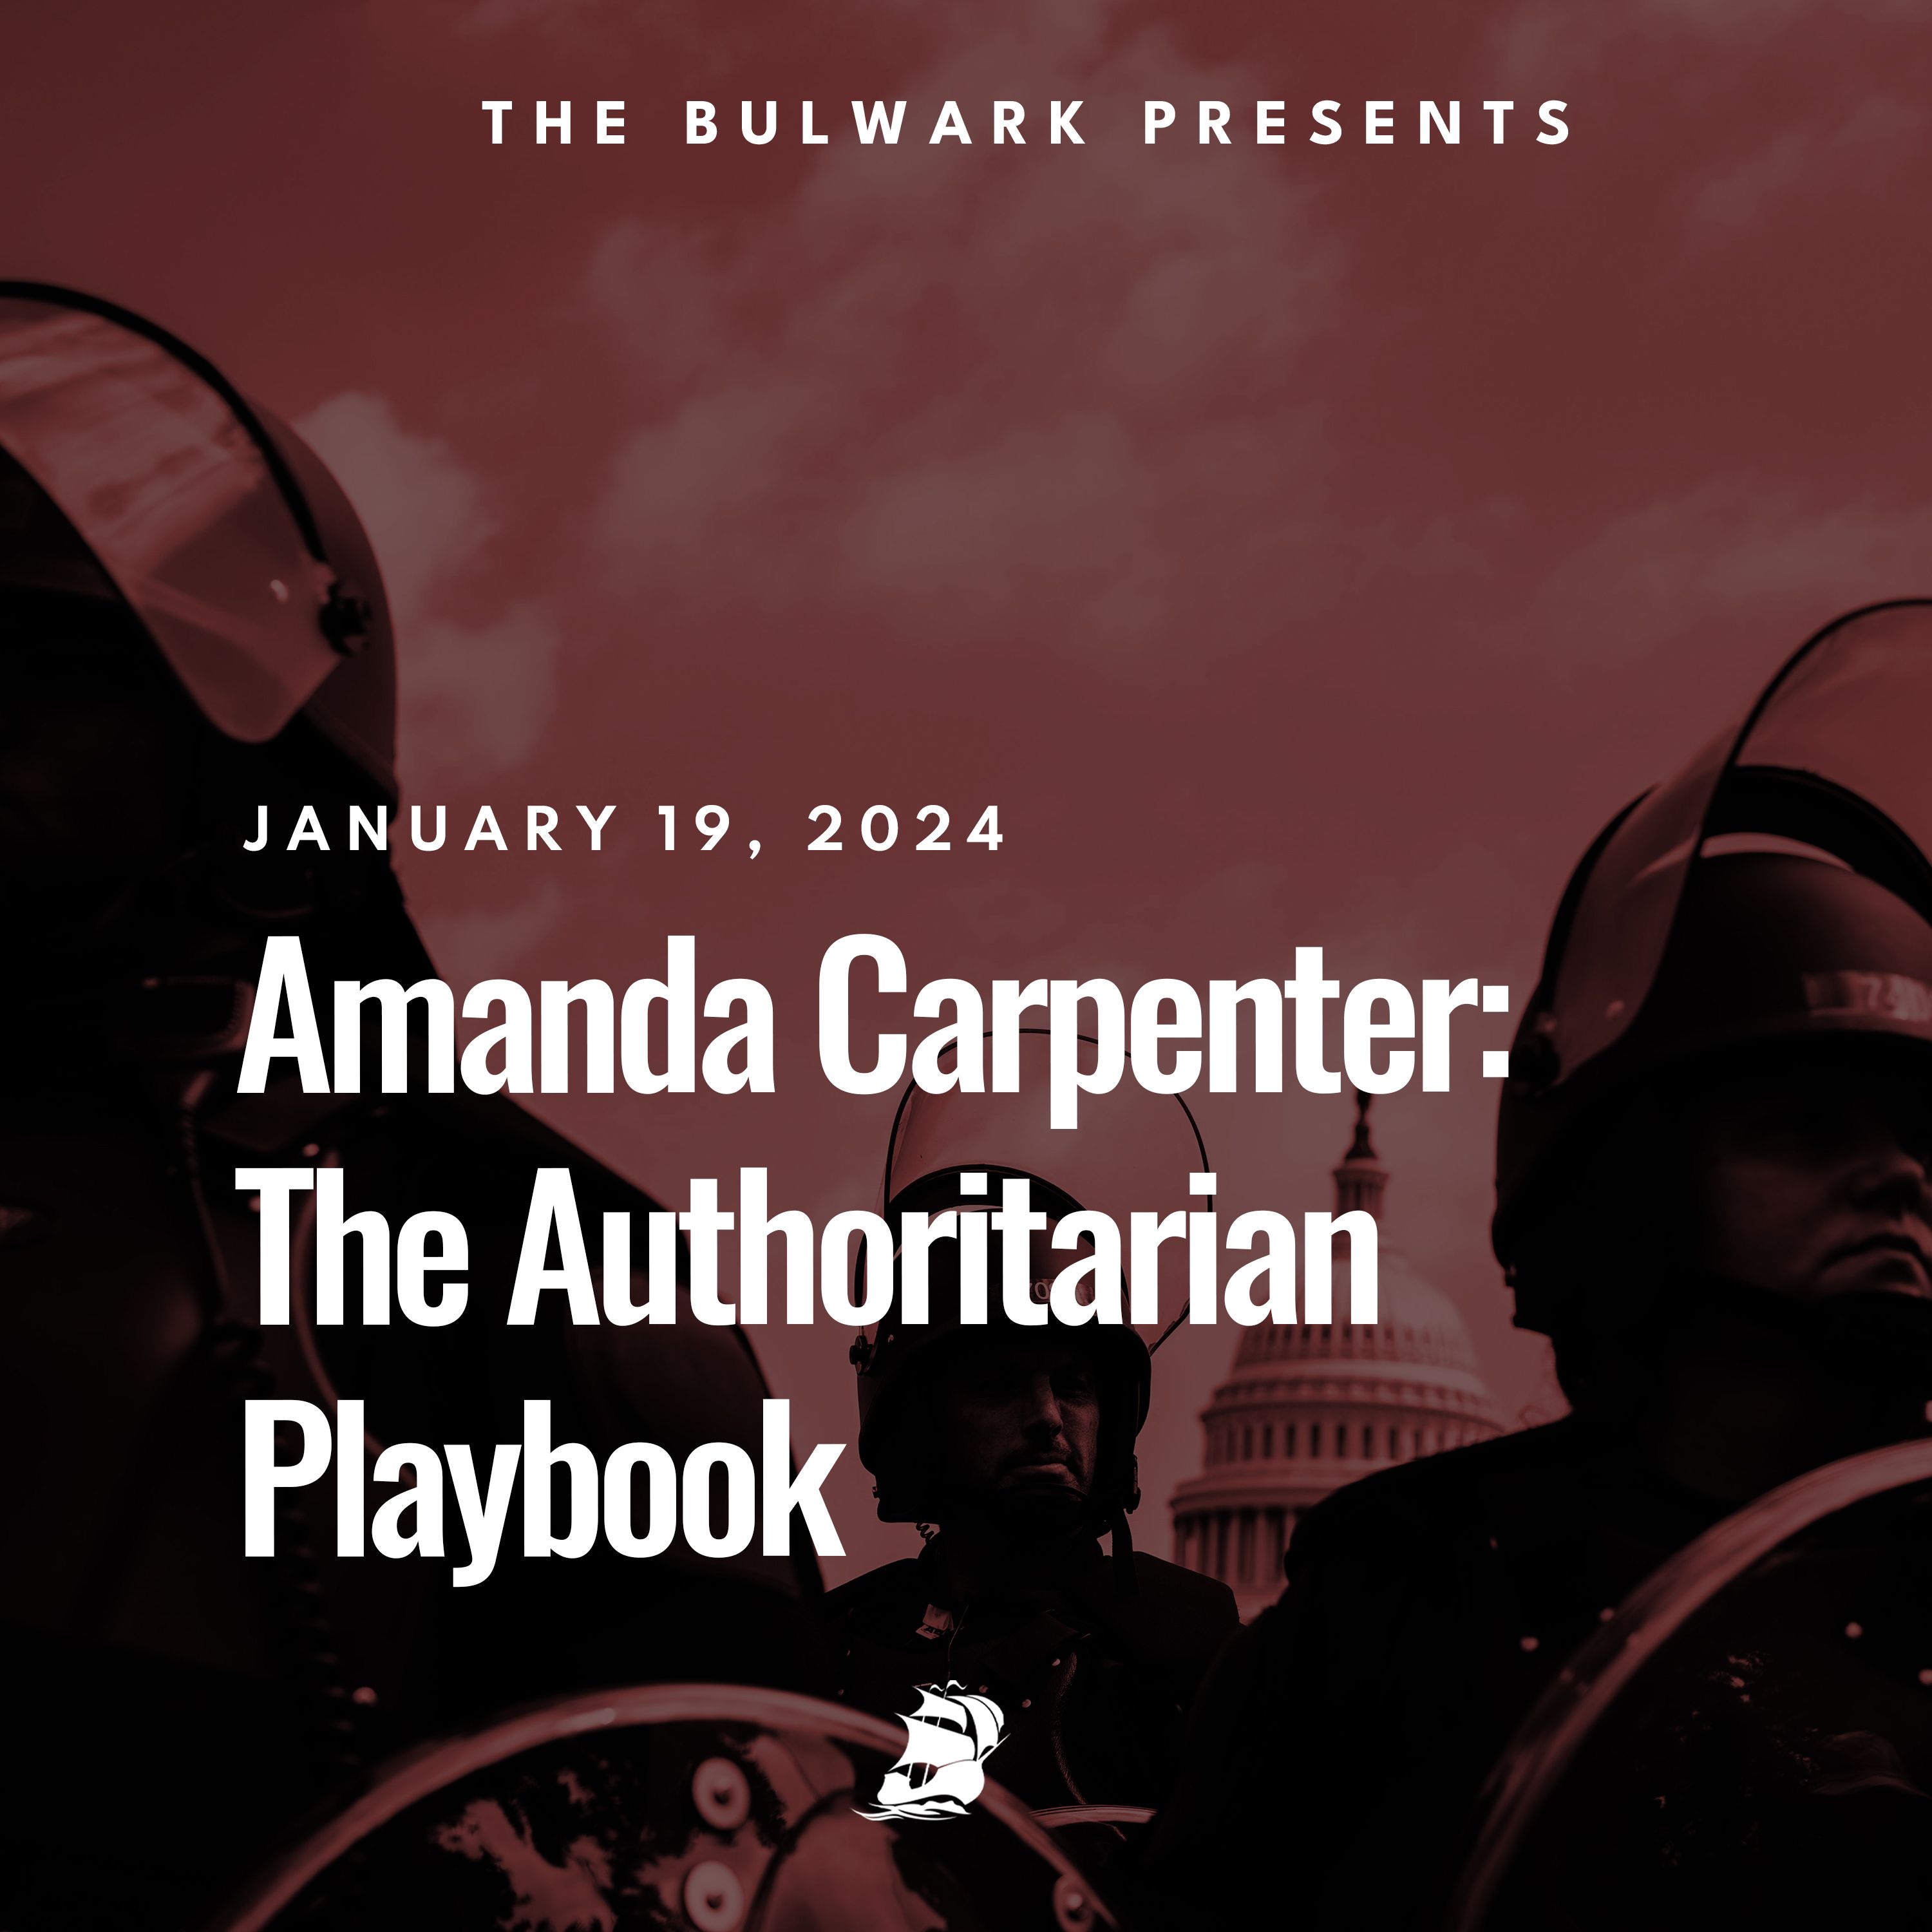 Amanda Carpenter: The Authoritarian Playbook